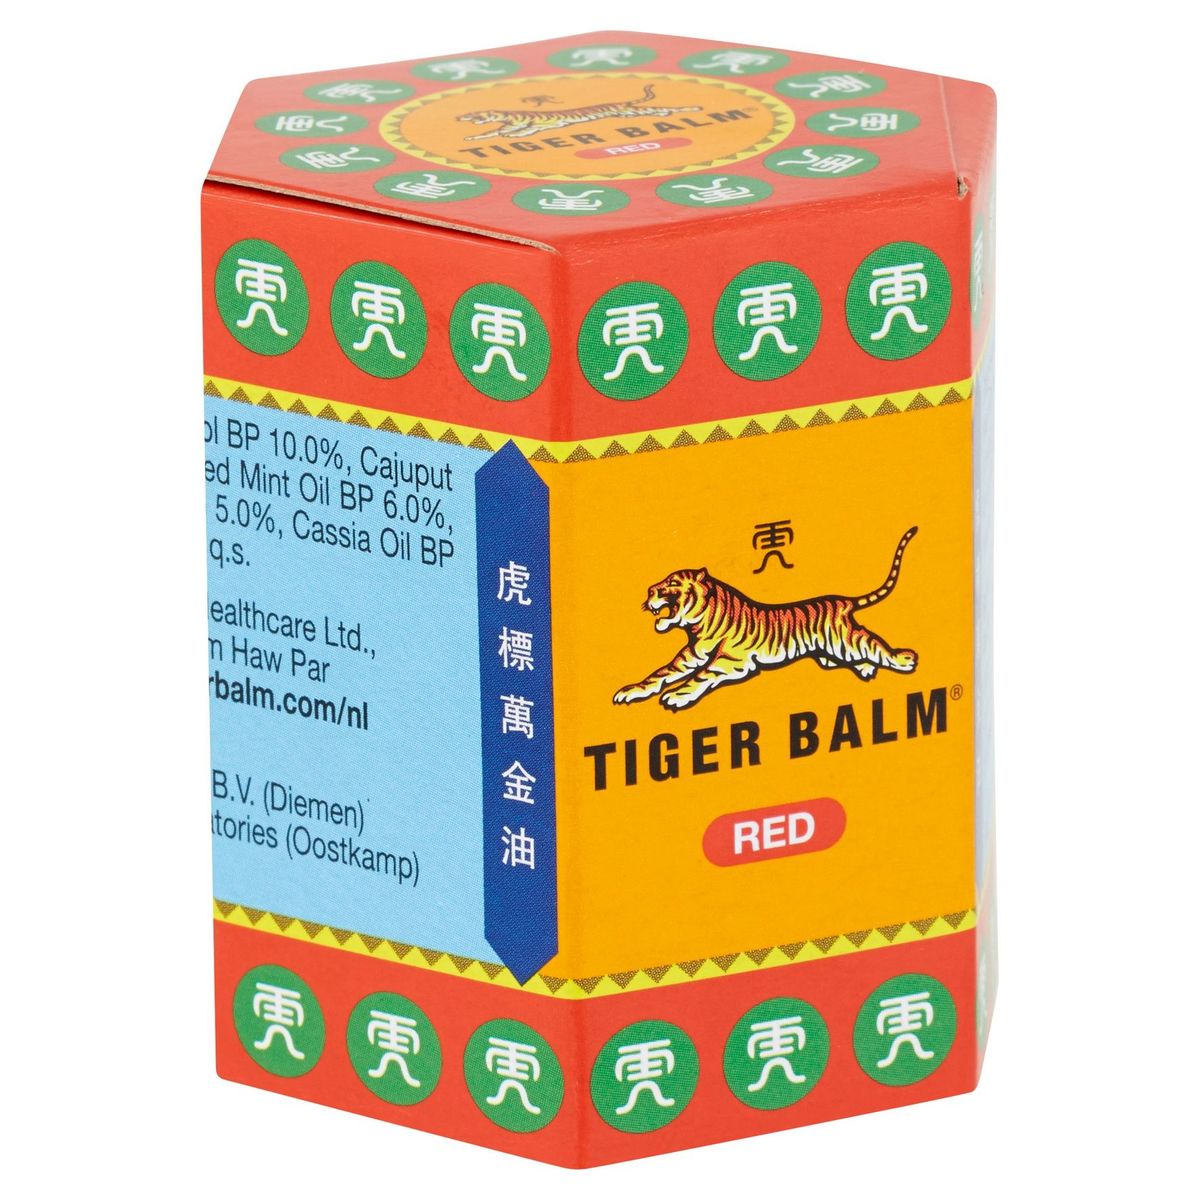 Tiger balm tijgerbalsem rood 30 g